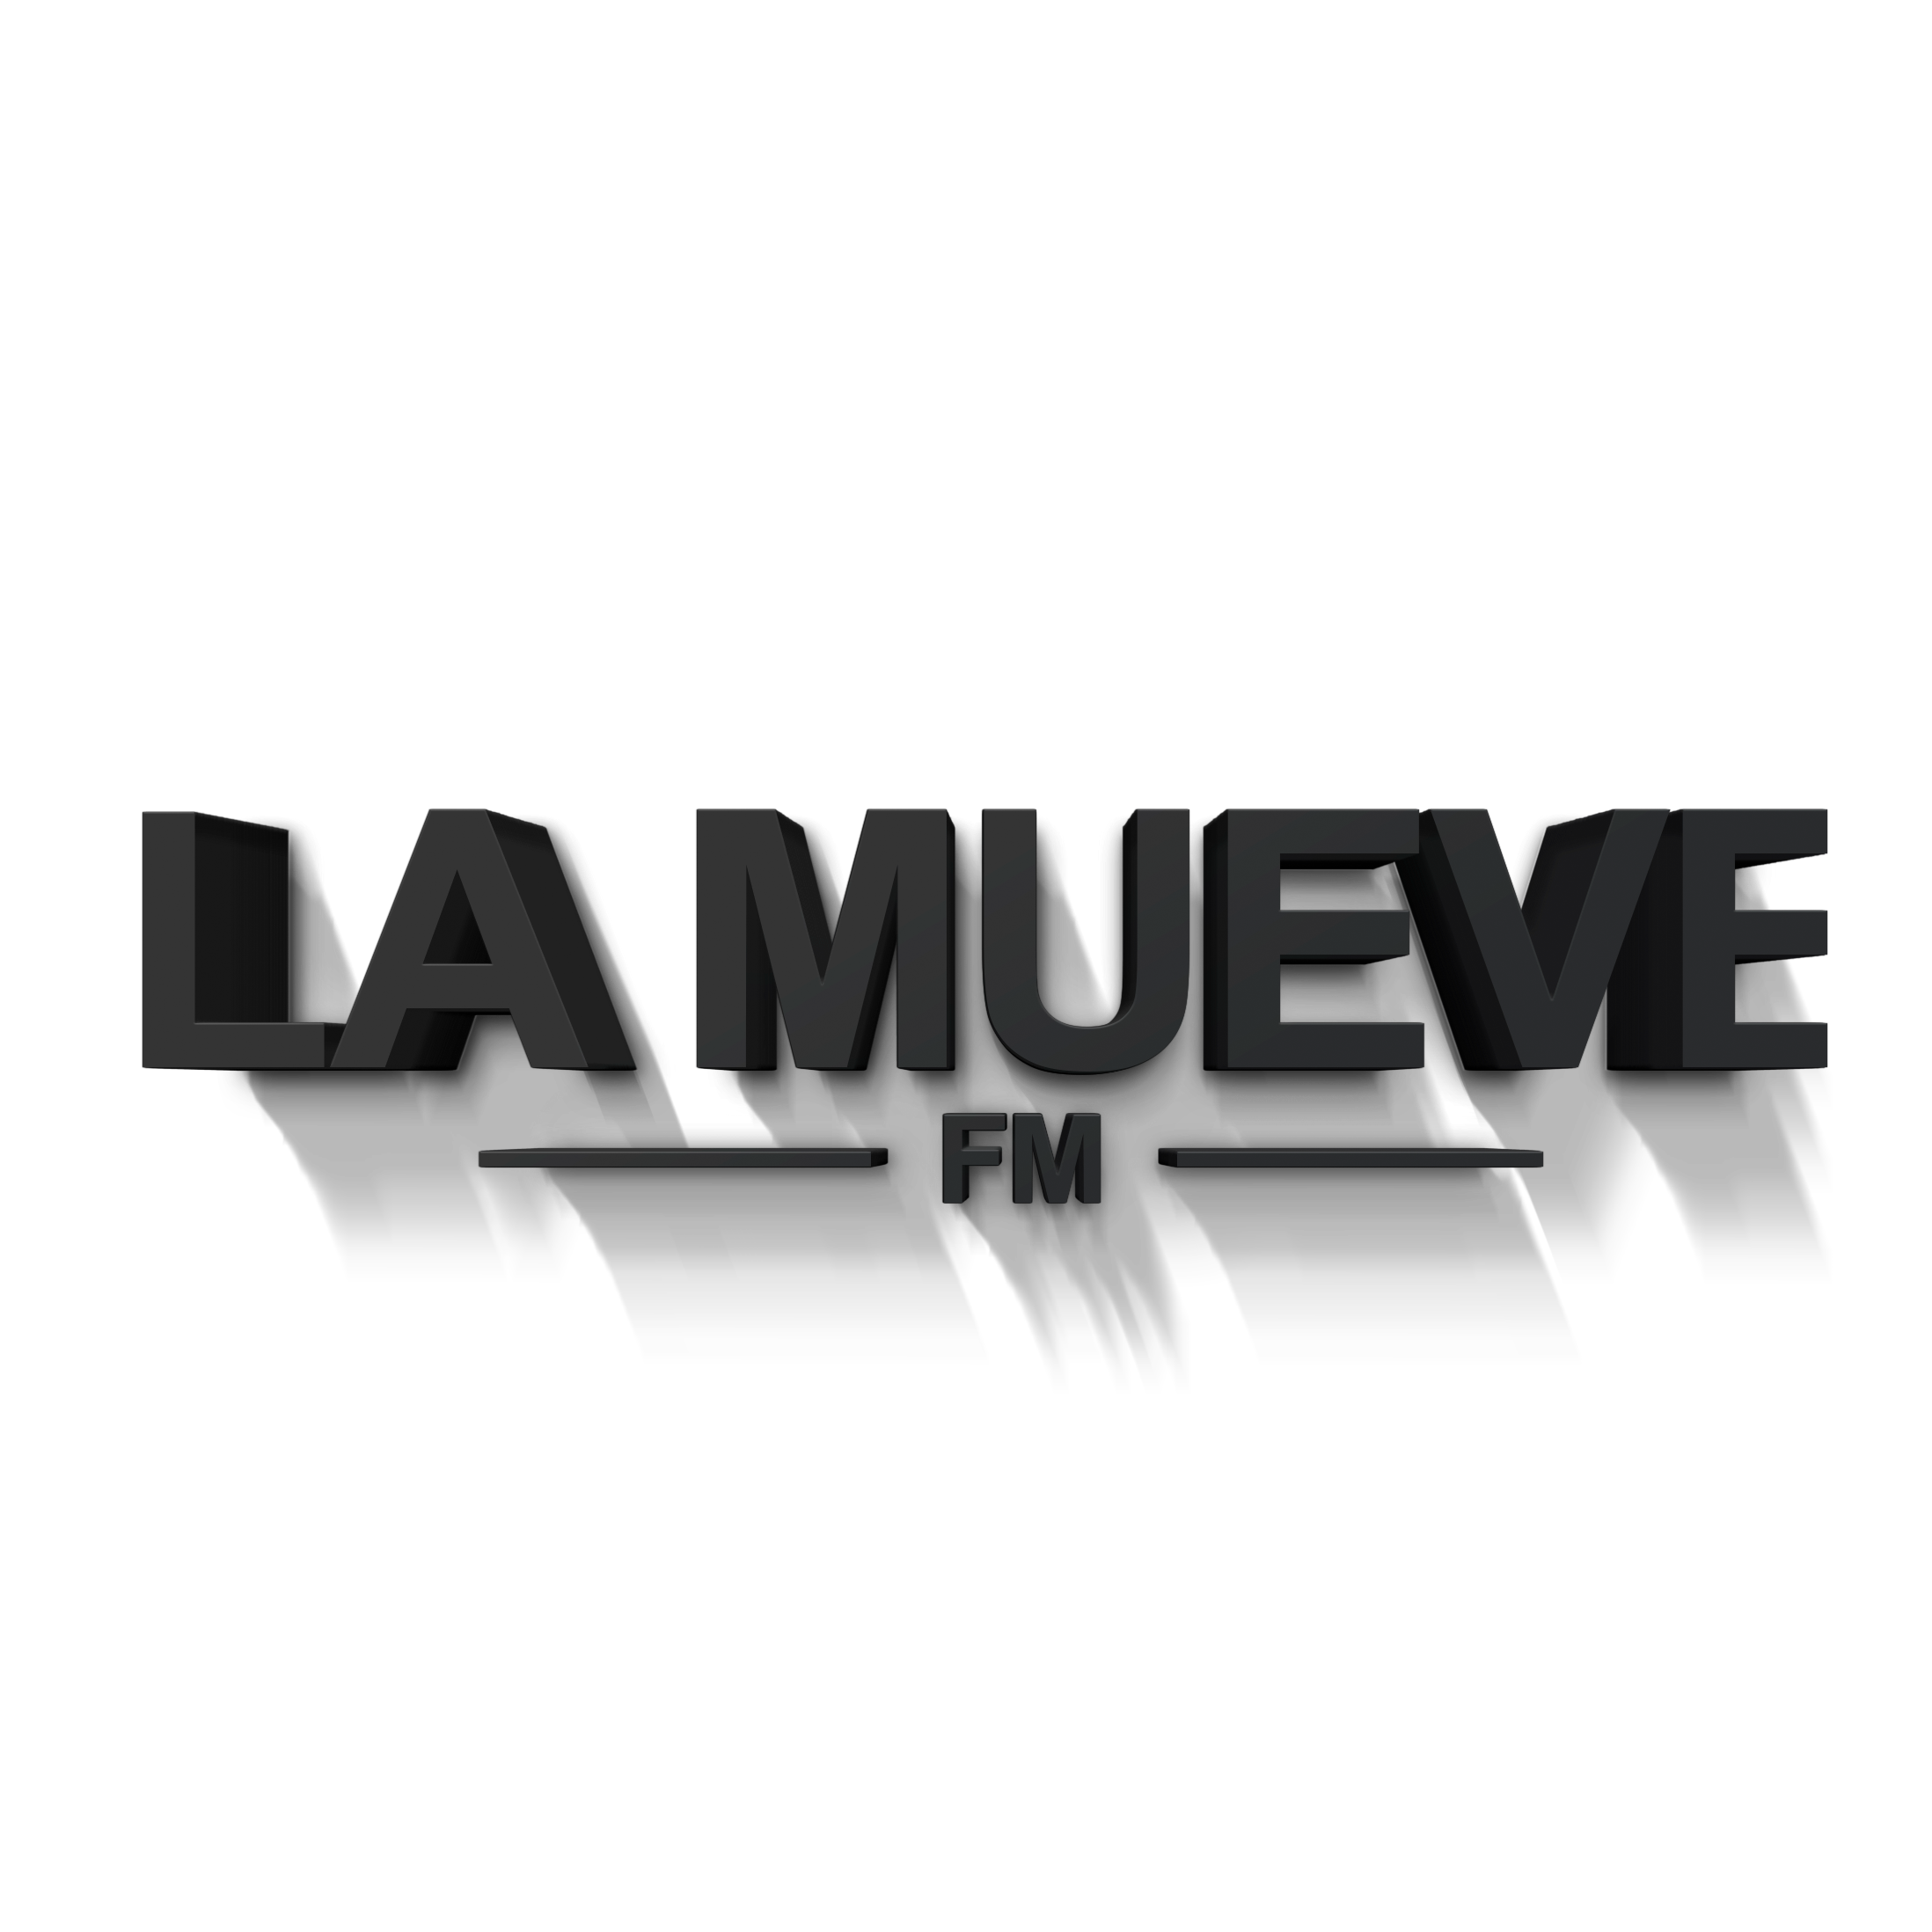 LaMueve FM